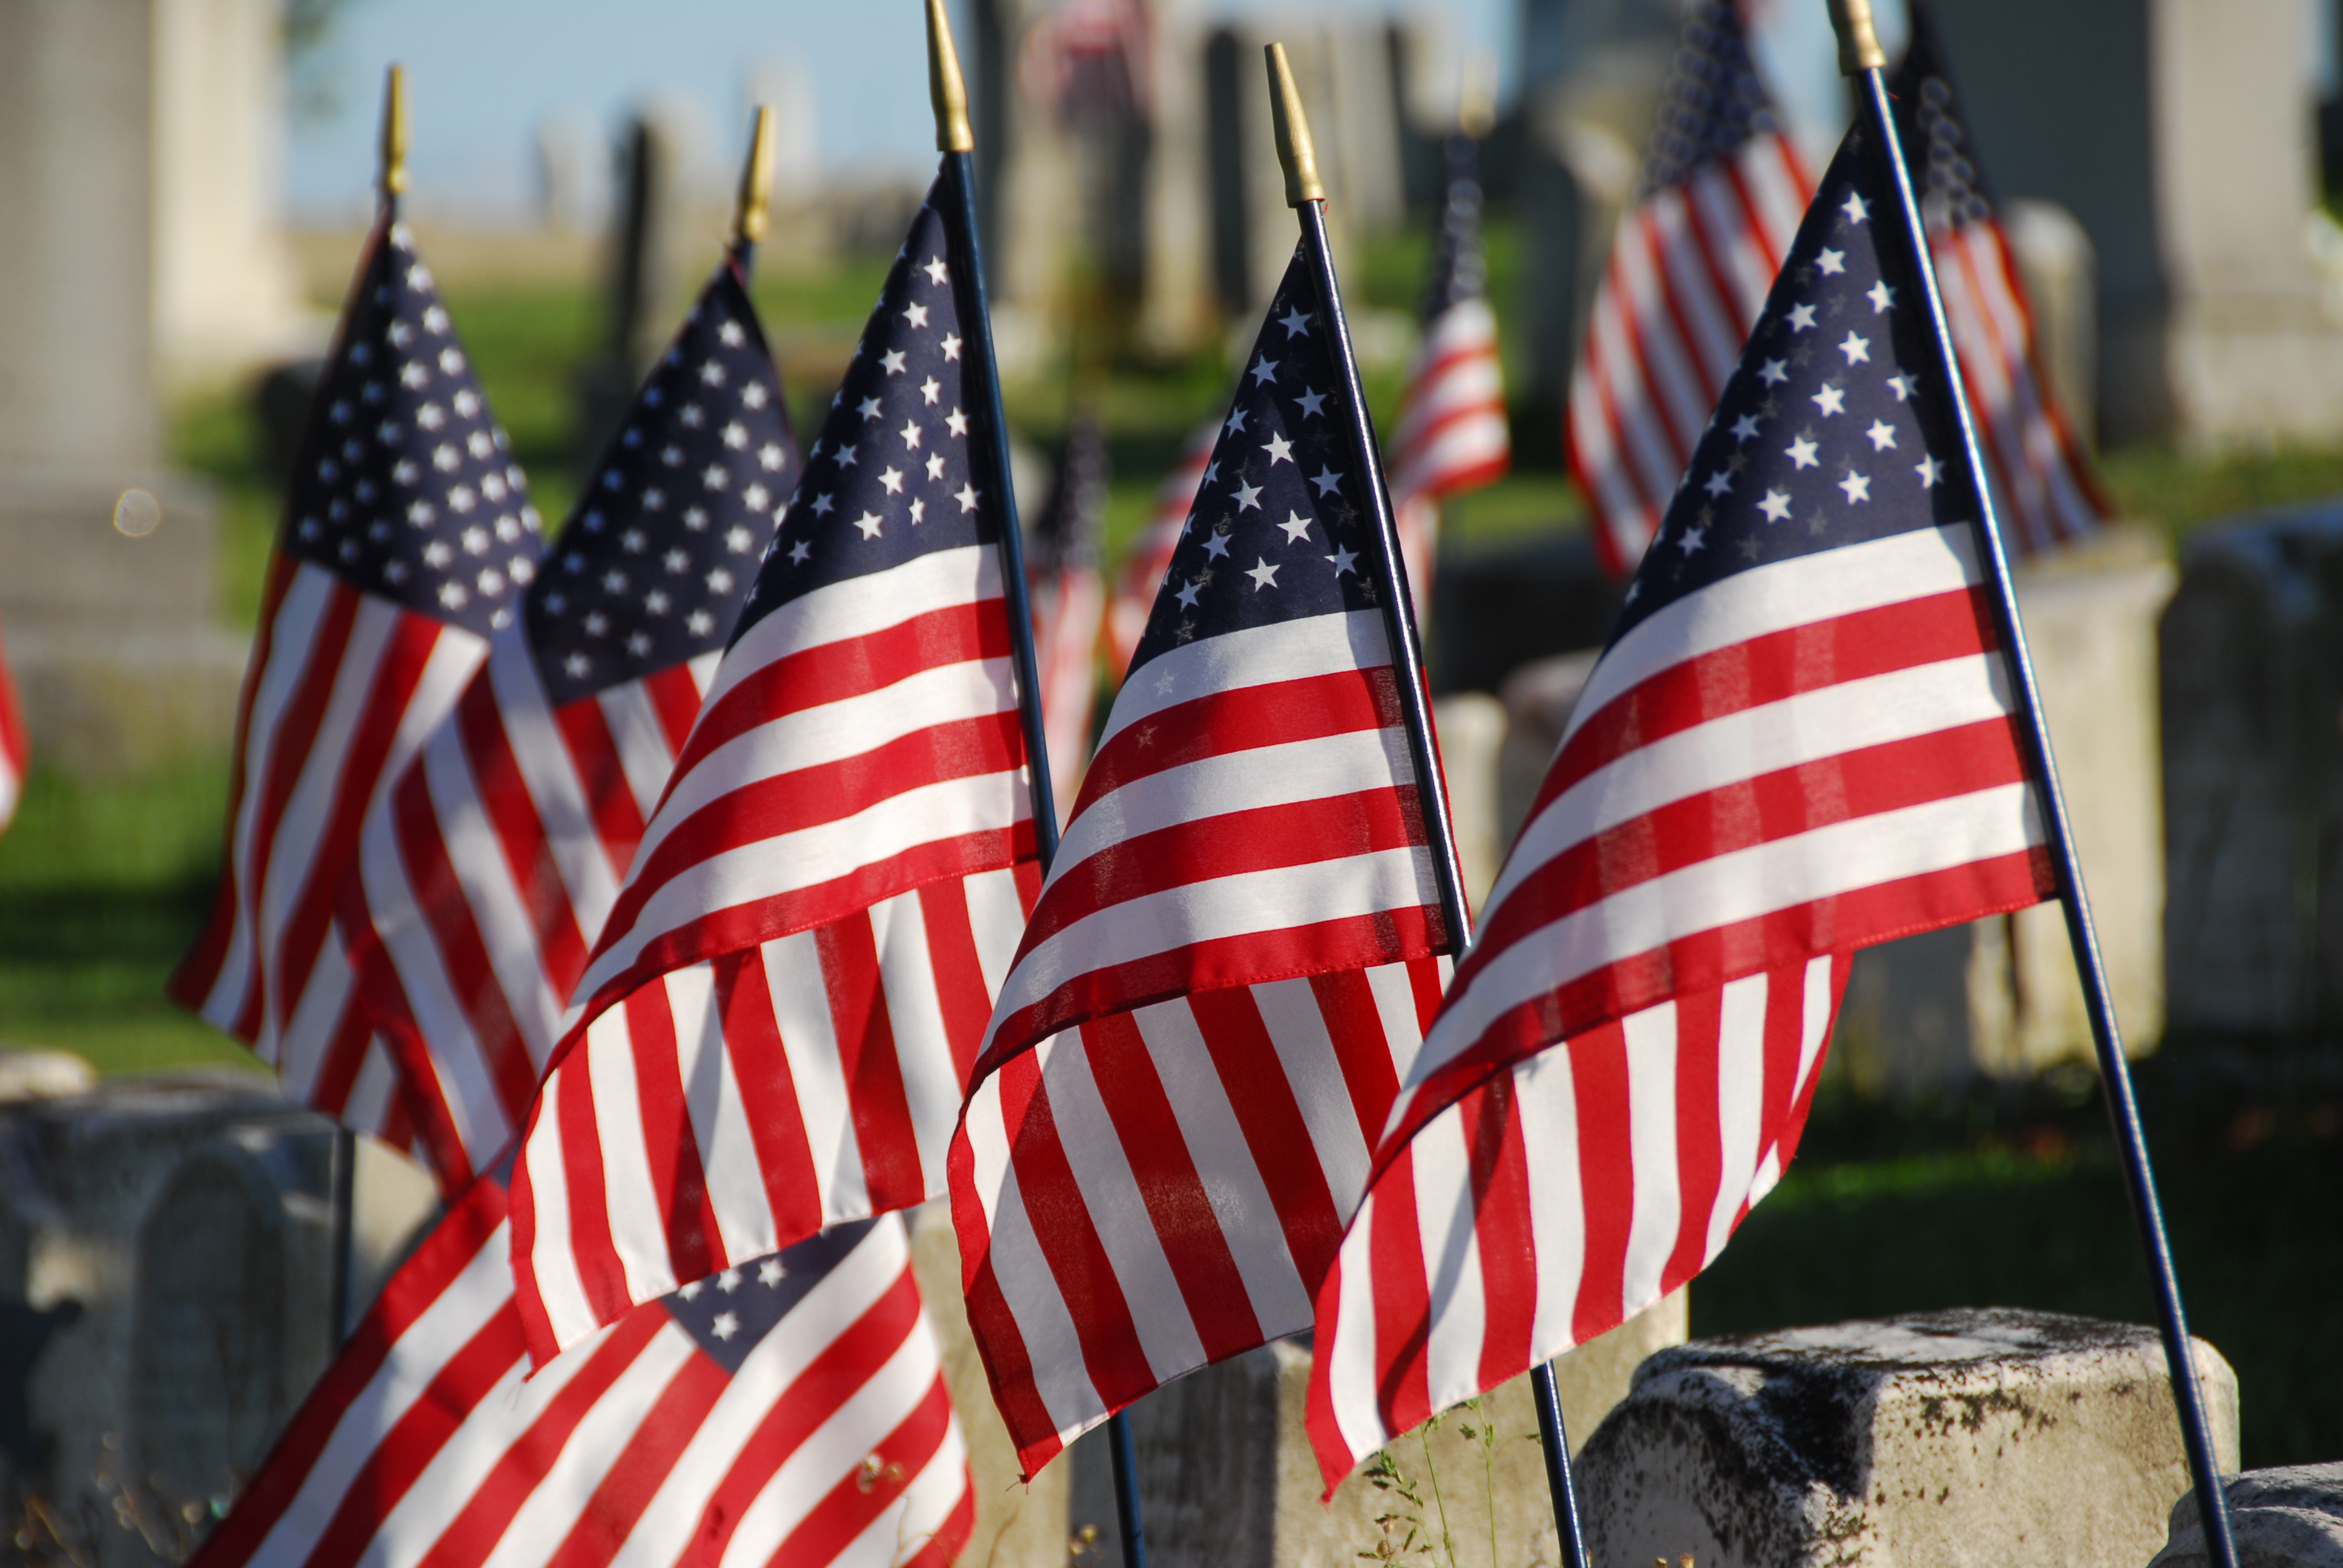 American flags waving above gravestones.